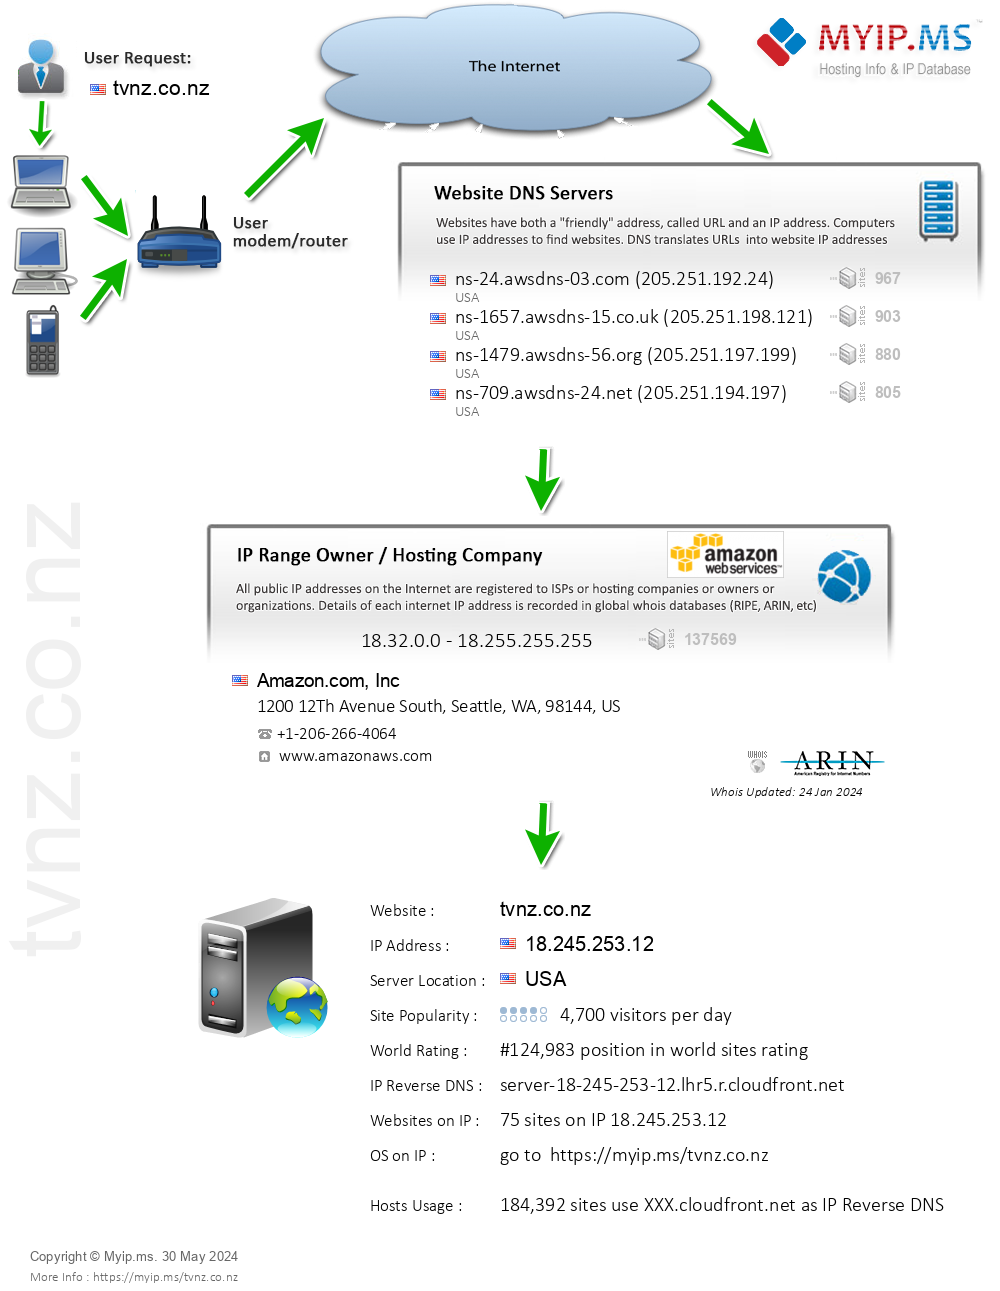 Tvnz.co.nz - Website Hosting Visual IP Diagram